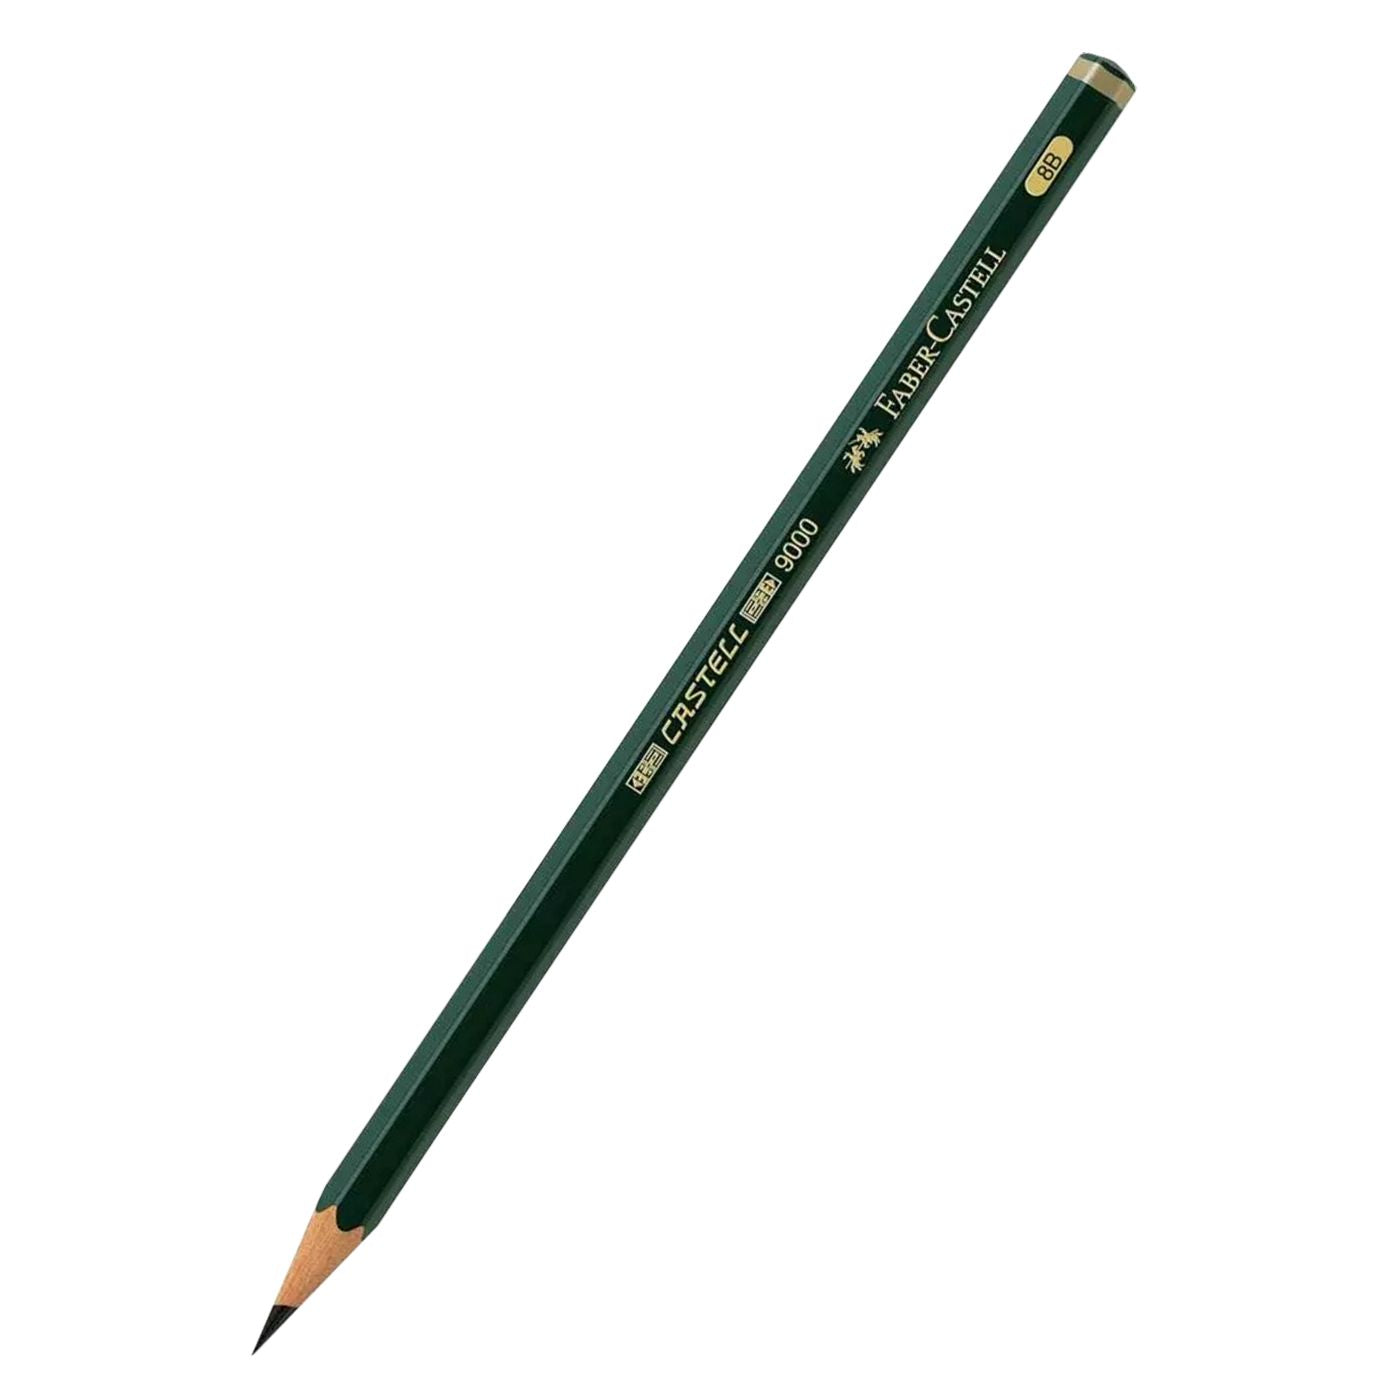 Faber-Castell Artist Grade Pencil Castell 9000 8B